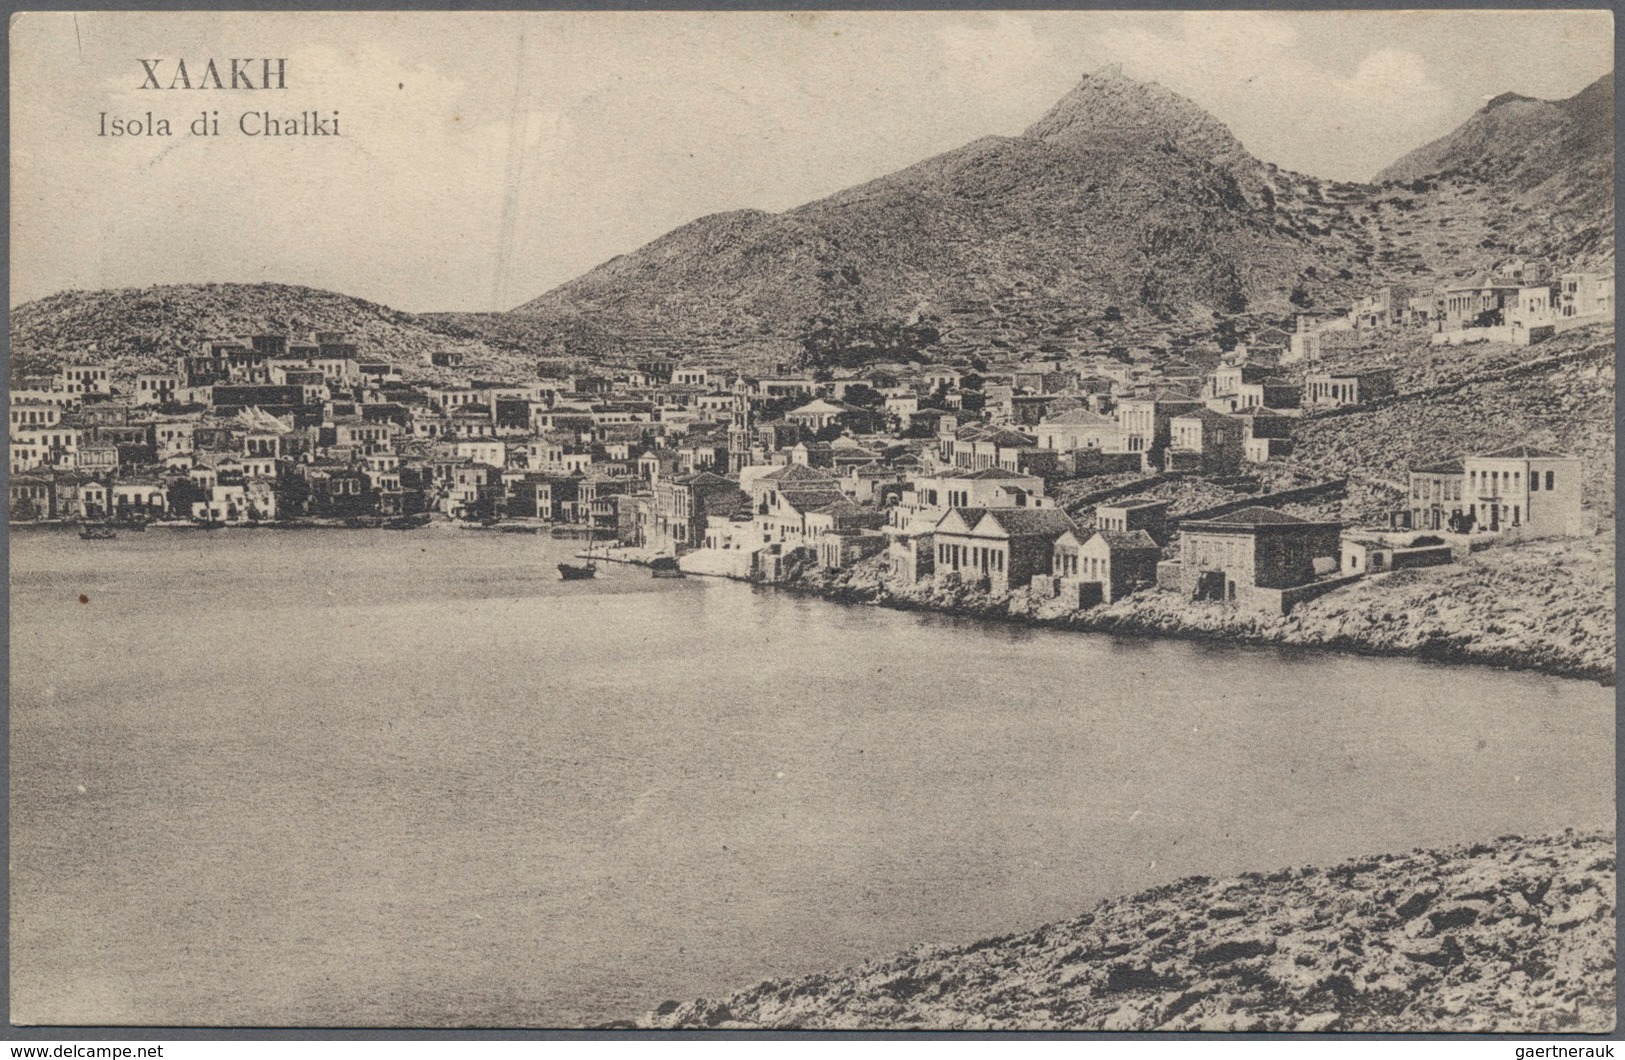 Ägäische Inseln: 1917, Lot Of Two Used Ppc: 1917 Ppc "Isola Di Chalki" Used 5 C. Green "Karki" 26.7. - Aegean